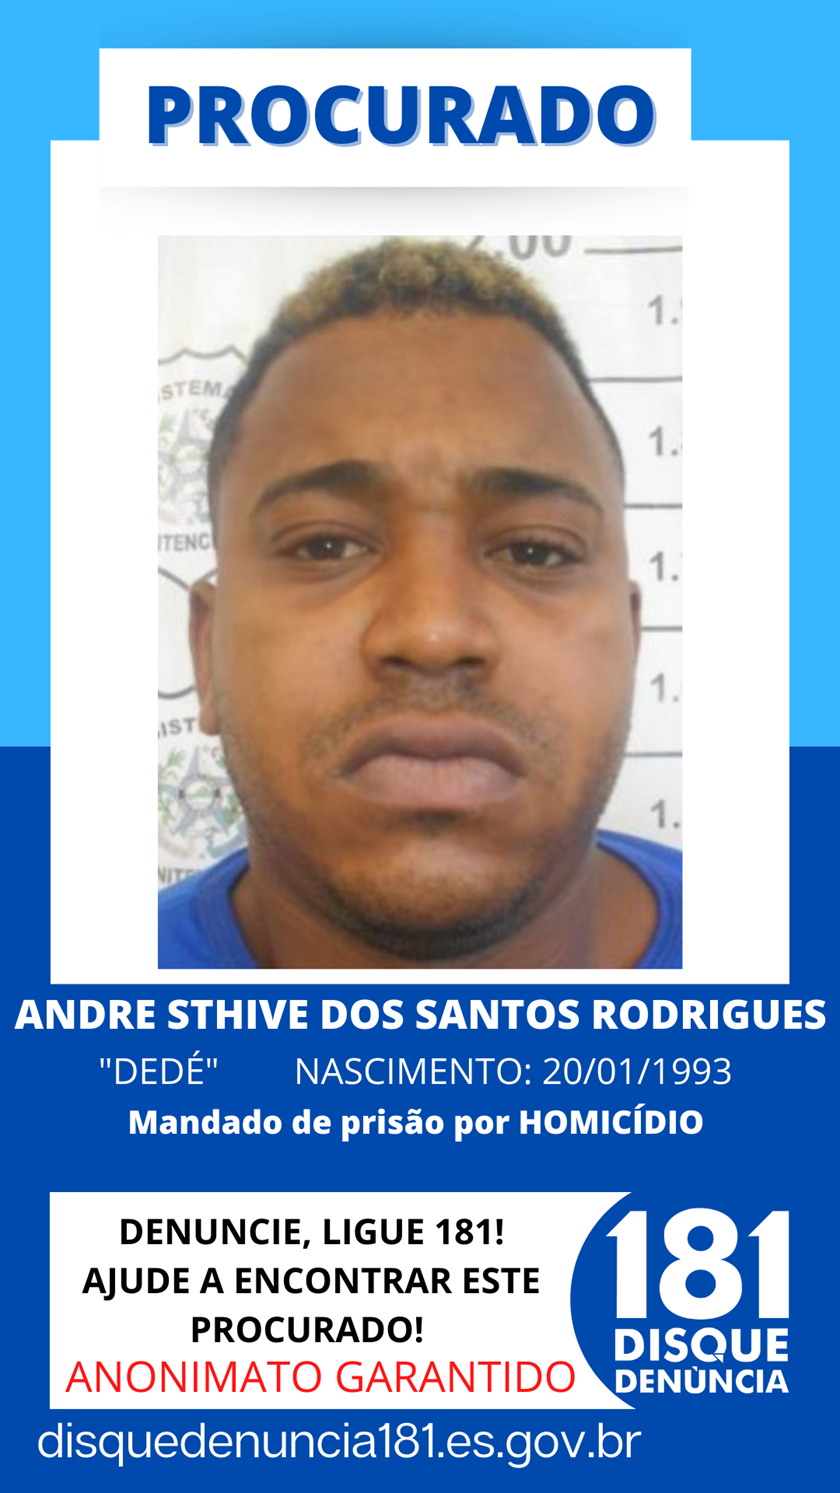 Logomarca - ANDRE STHIVE DOS SANTOS RODRIGUES